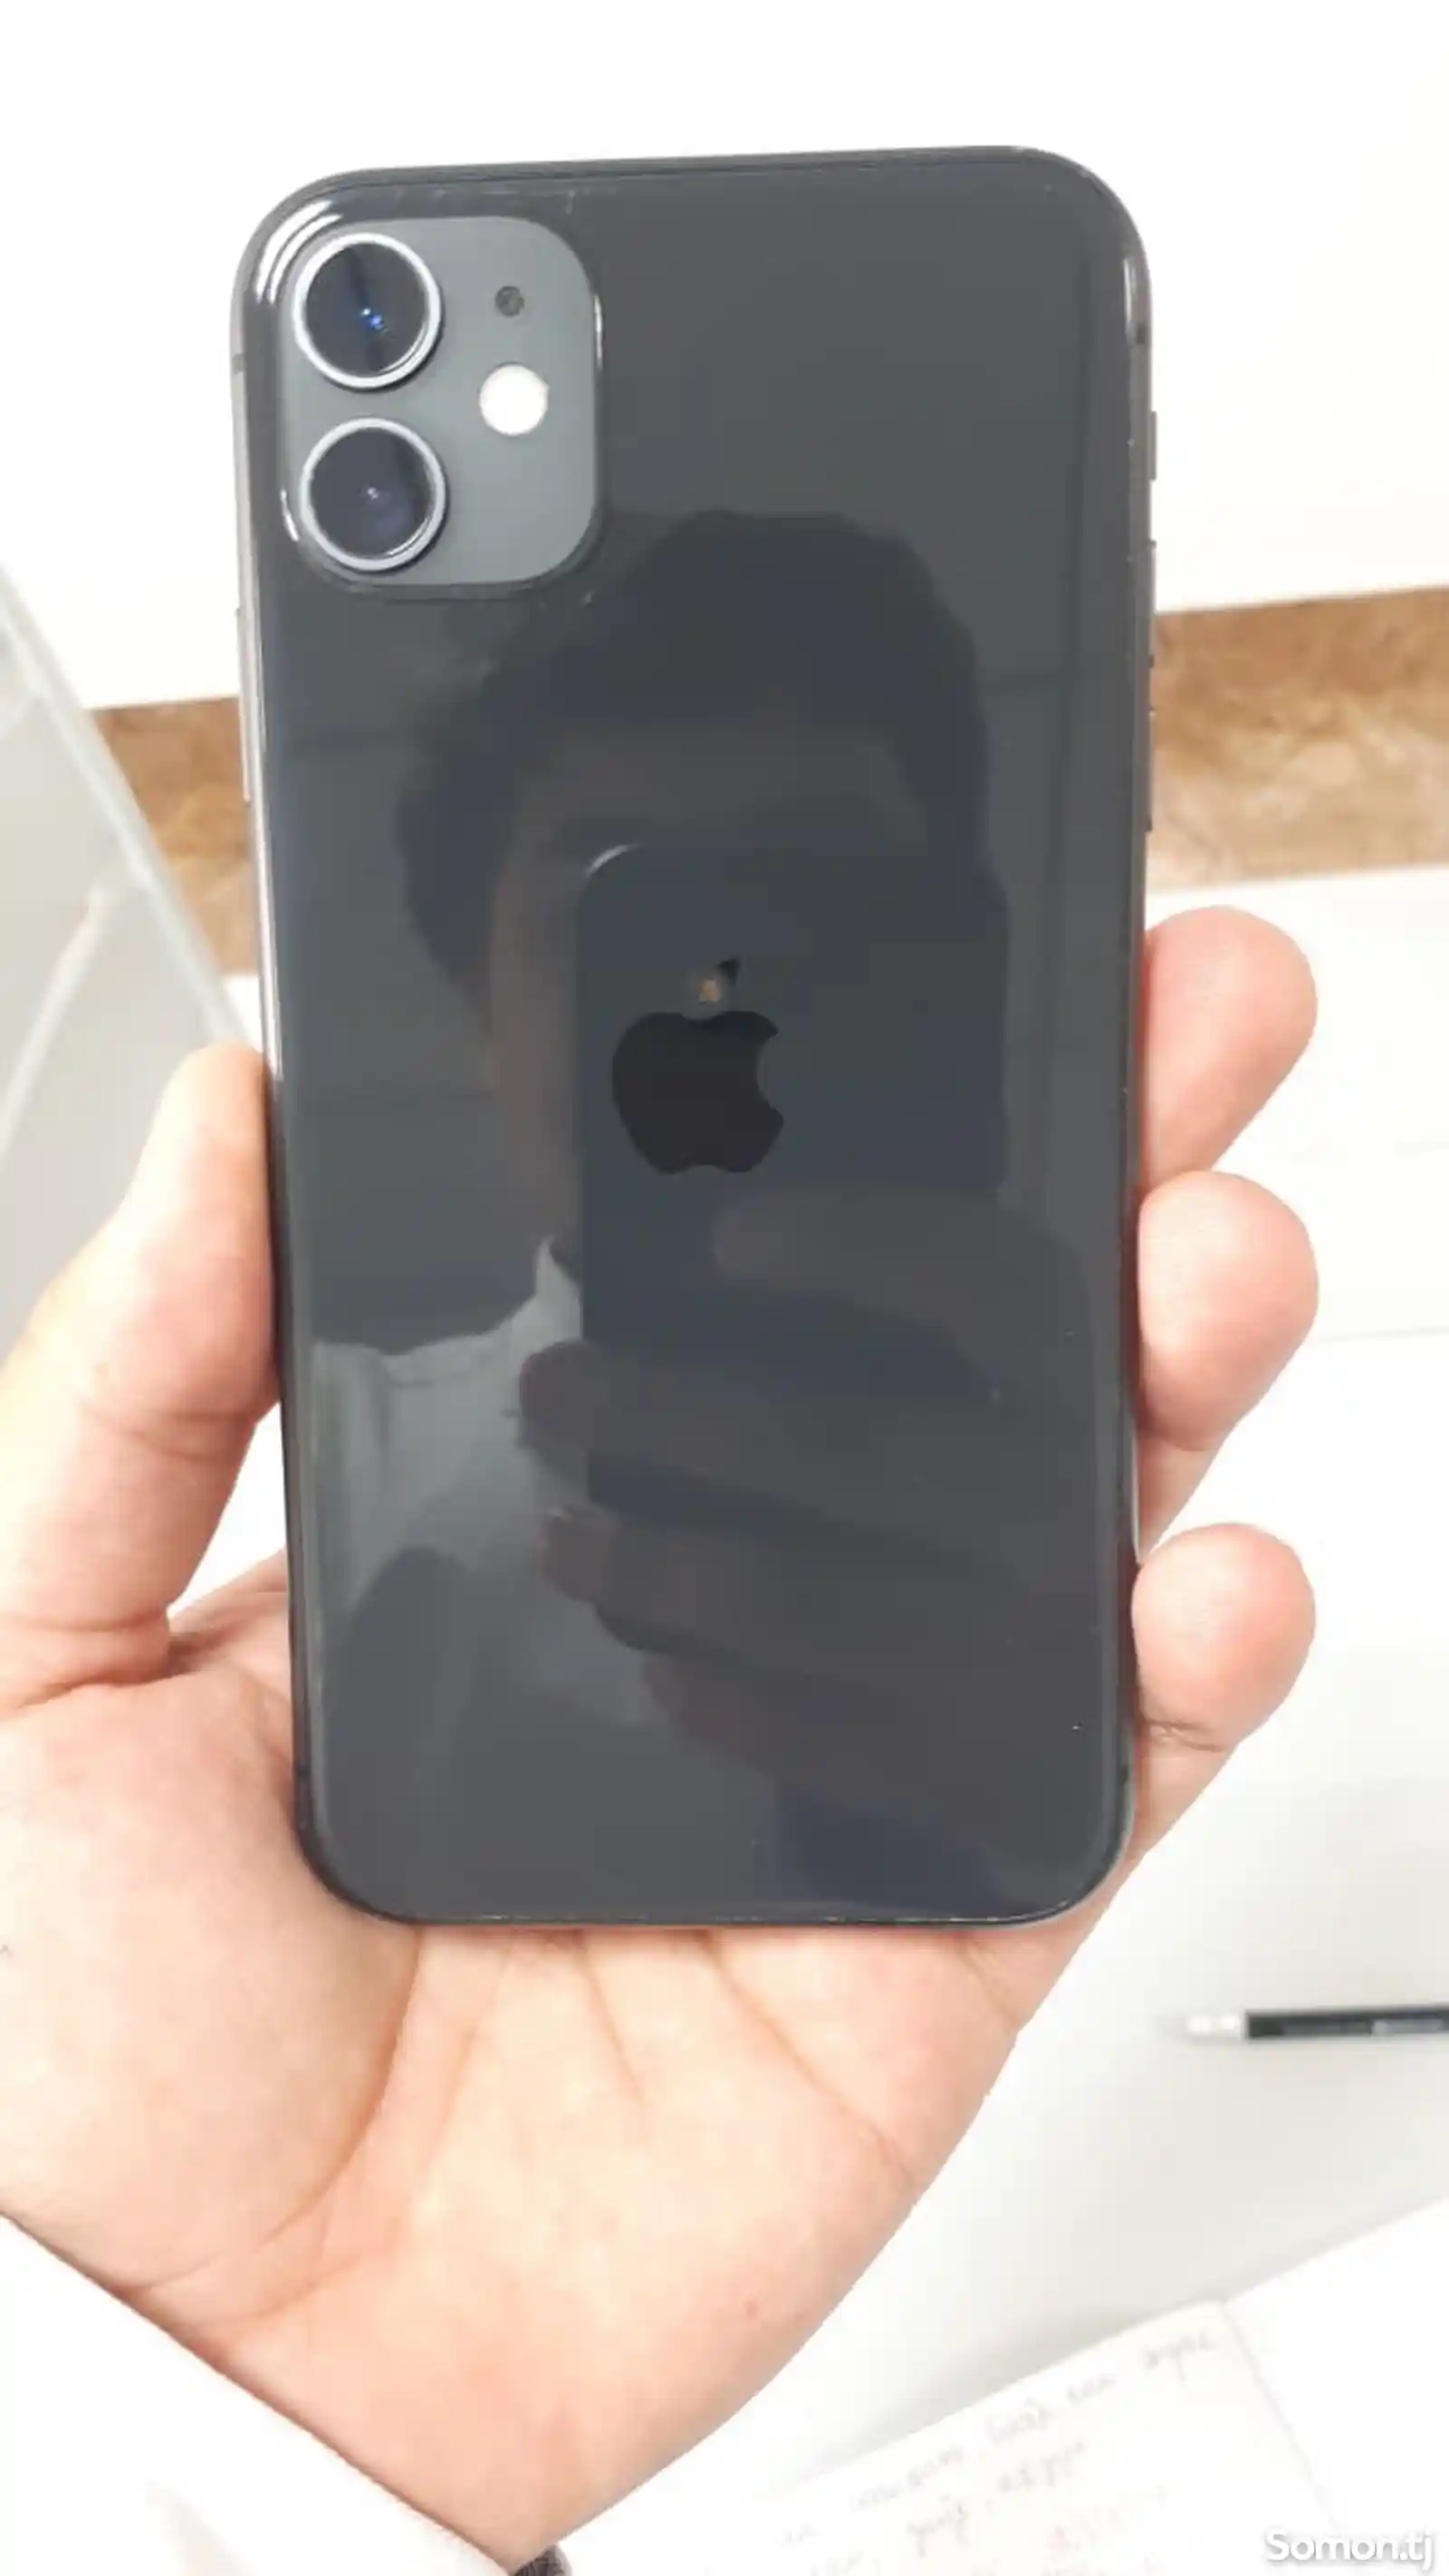 Apple iPhone 11, 64 gb, Black-3